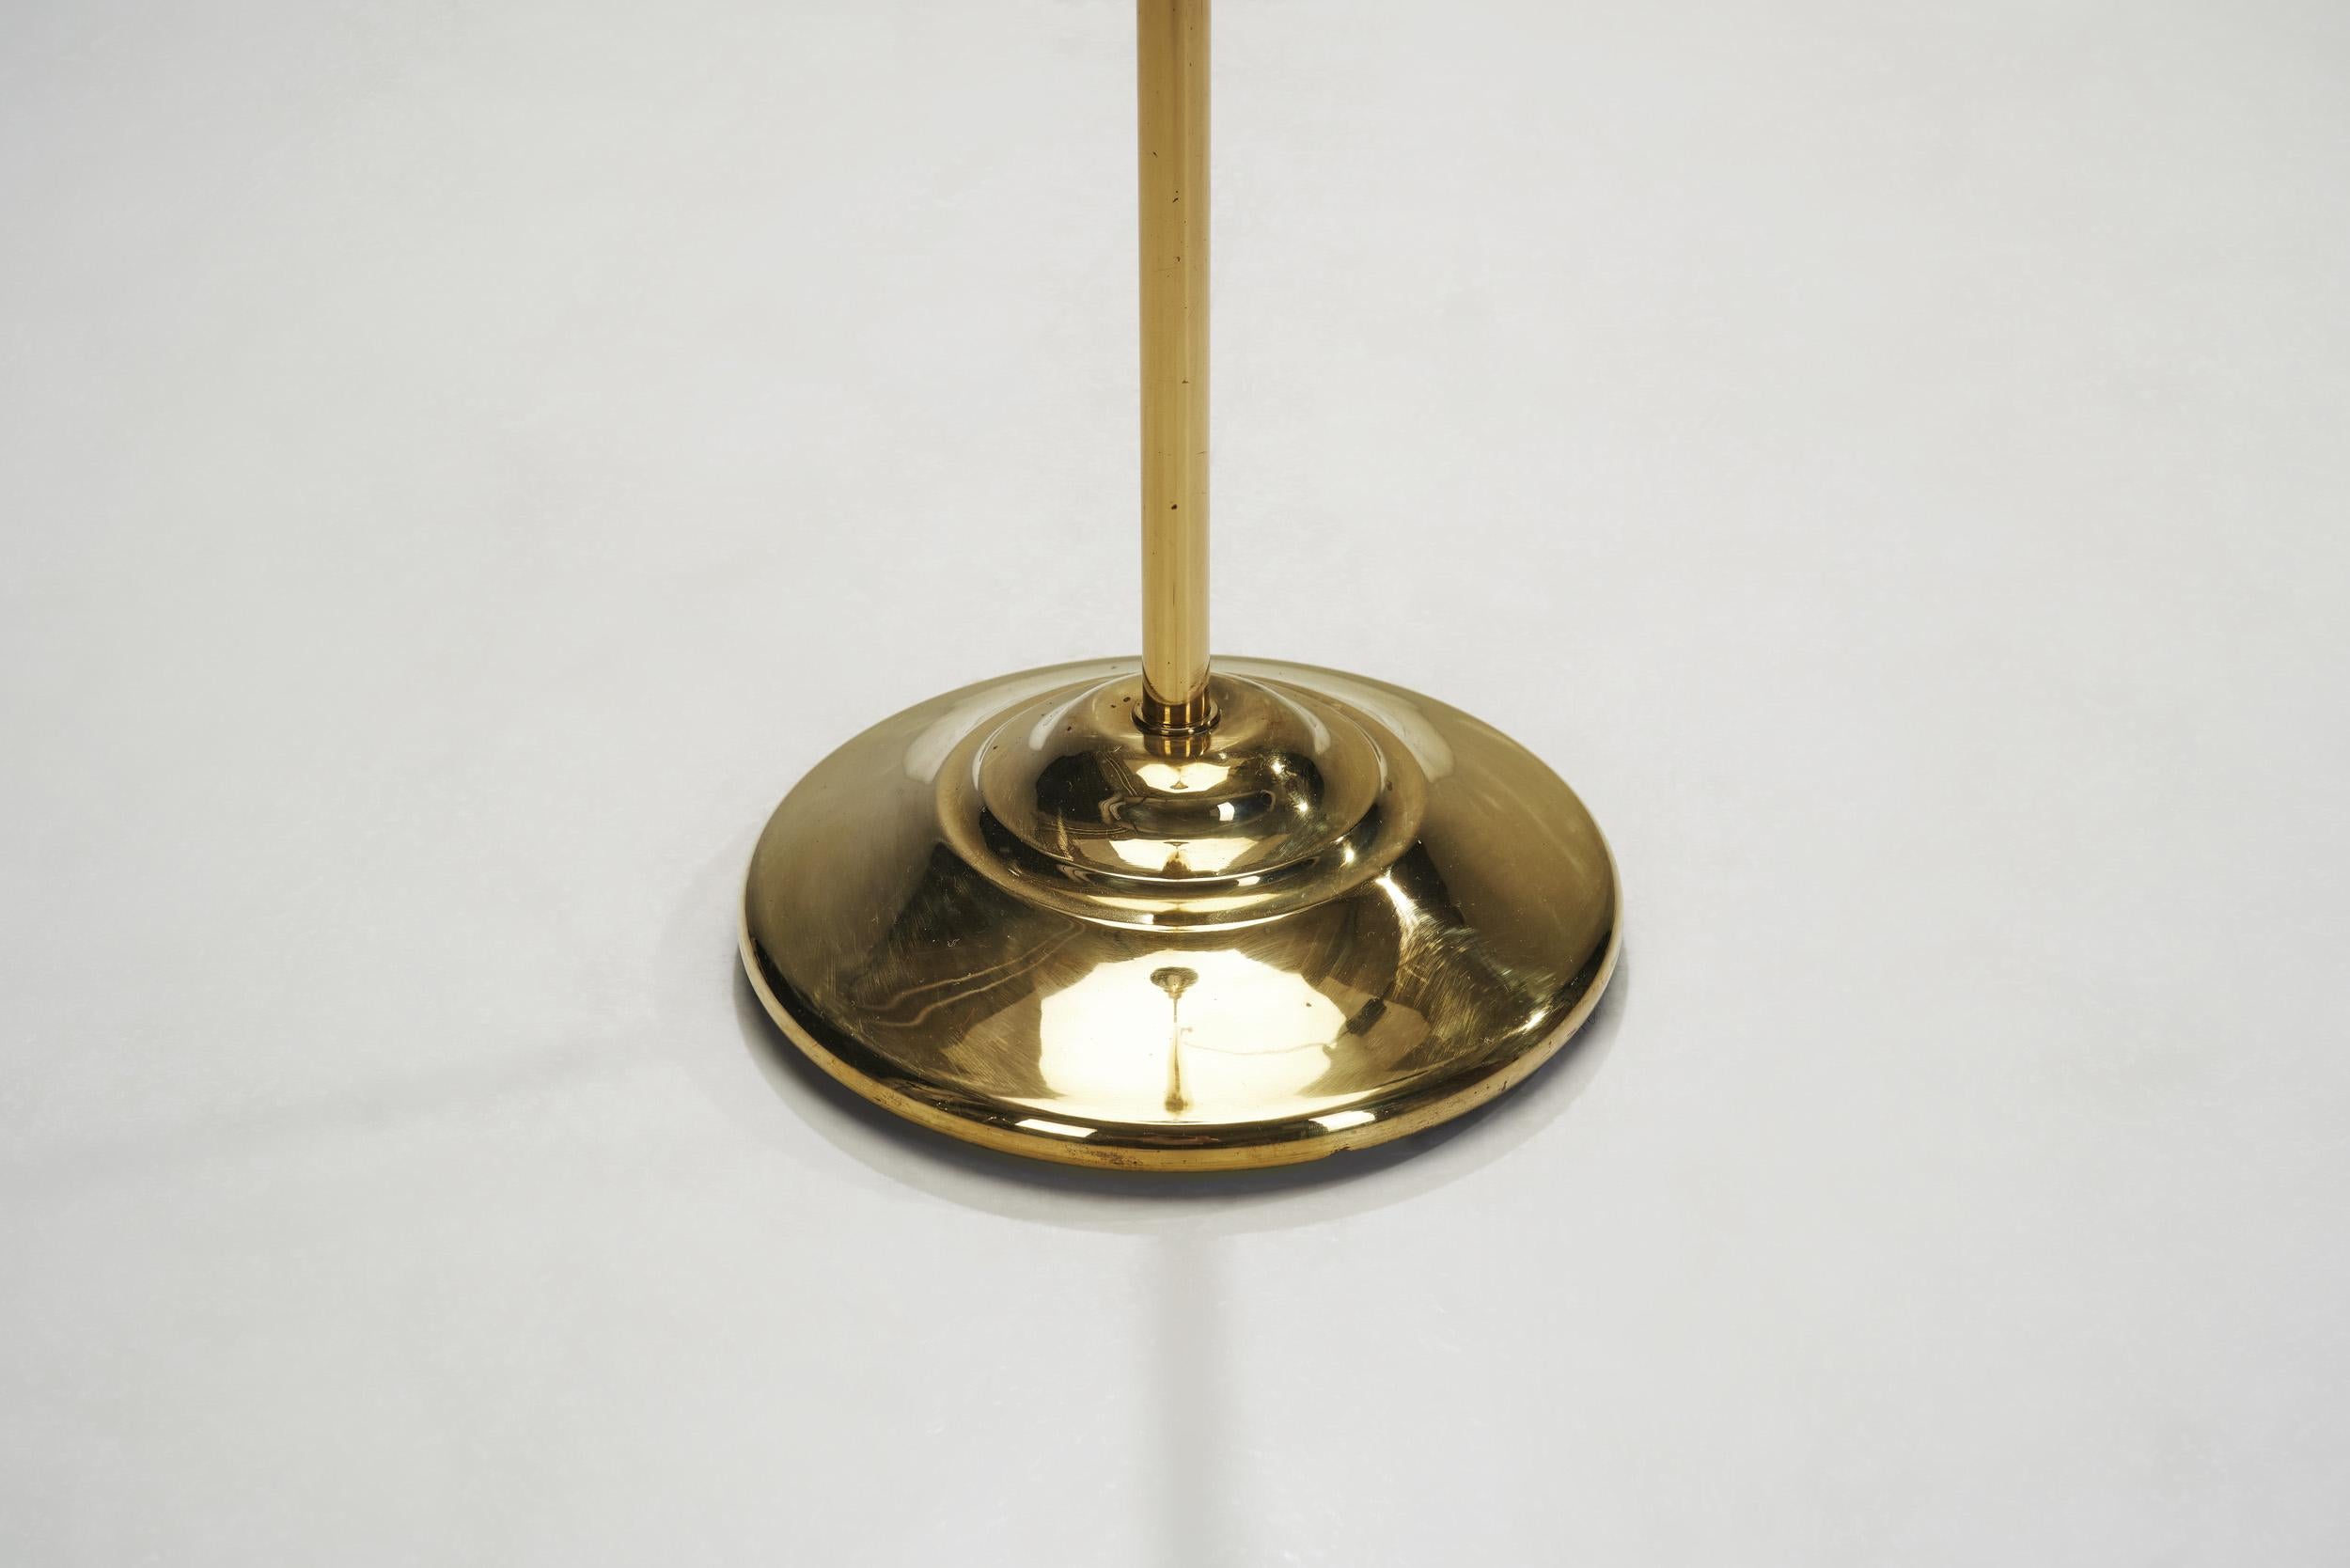 Jan Wickelgren Curved Brass Floor Lamp for Aneta Belysning AB, Sweden 1970s For Sale 9